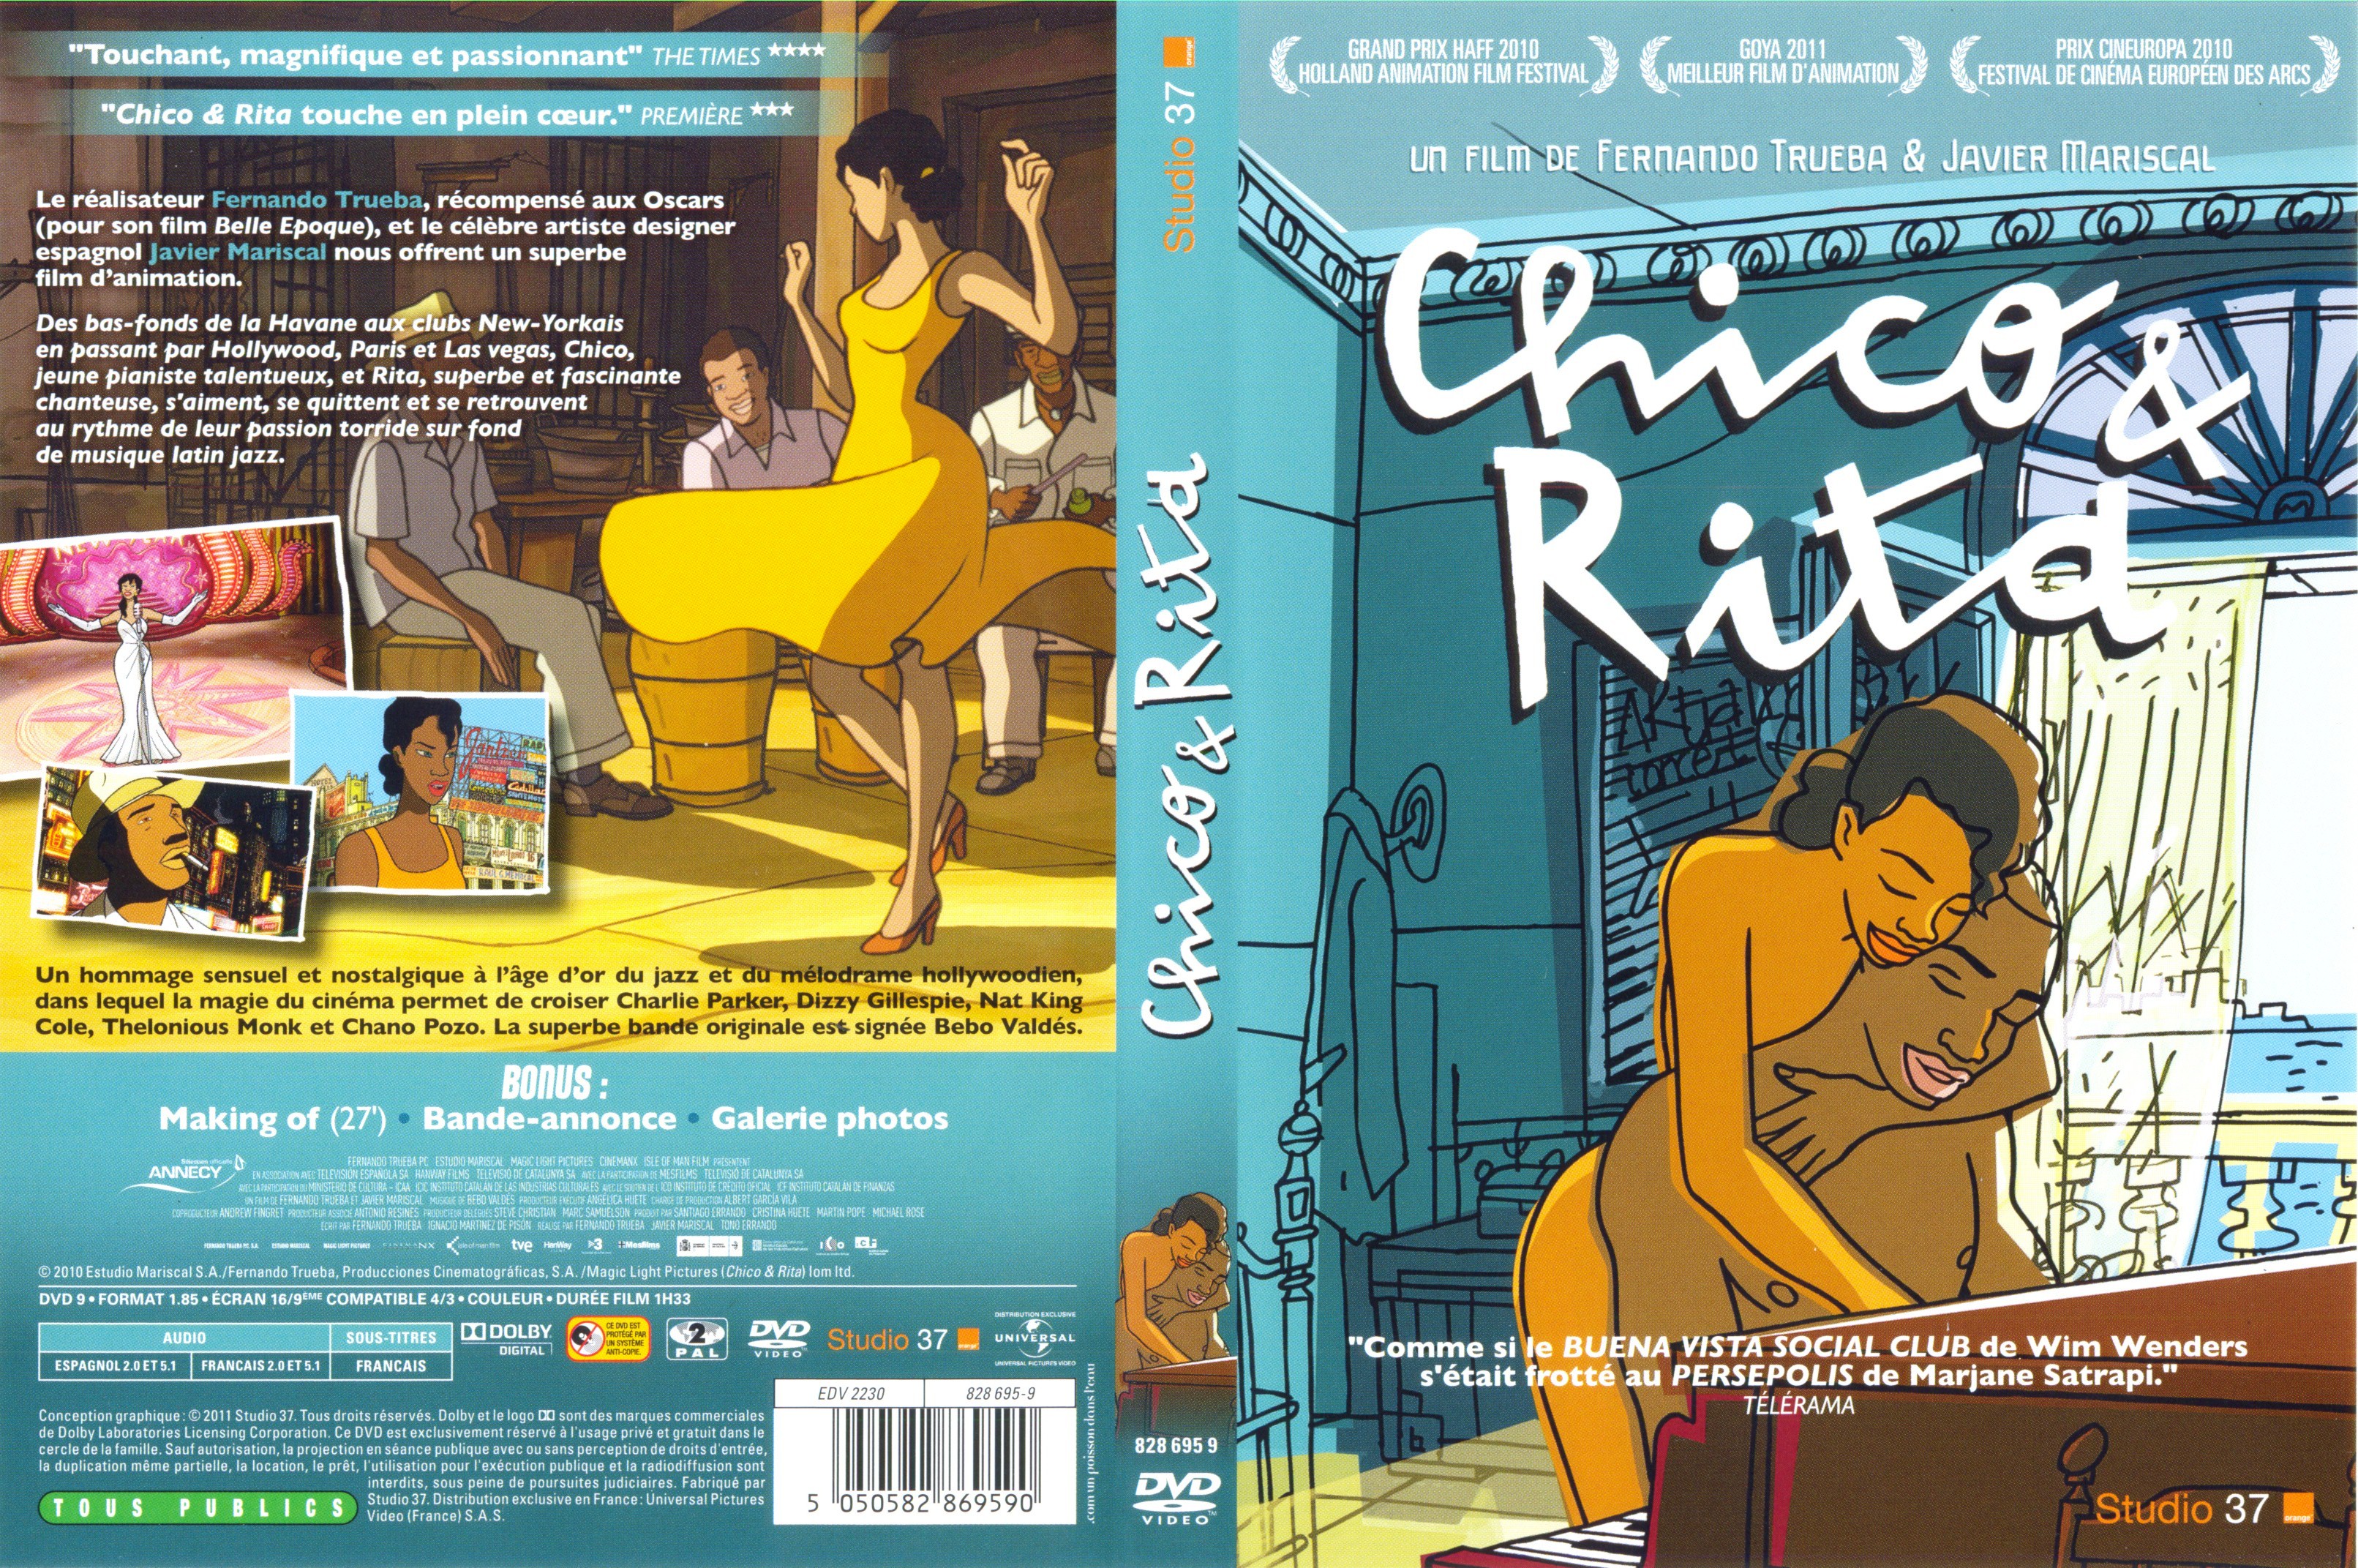 Jaquette DVD Chico & Rita